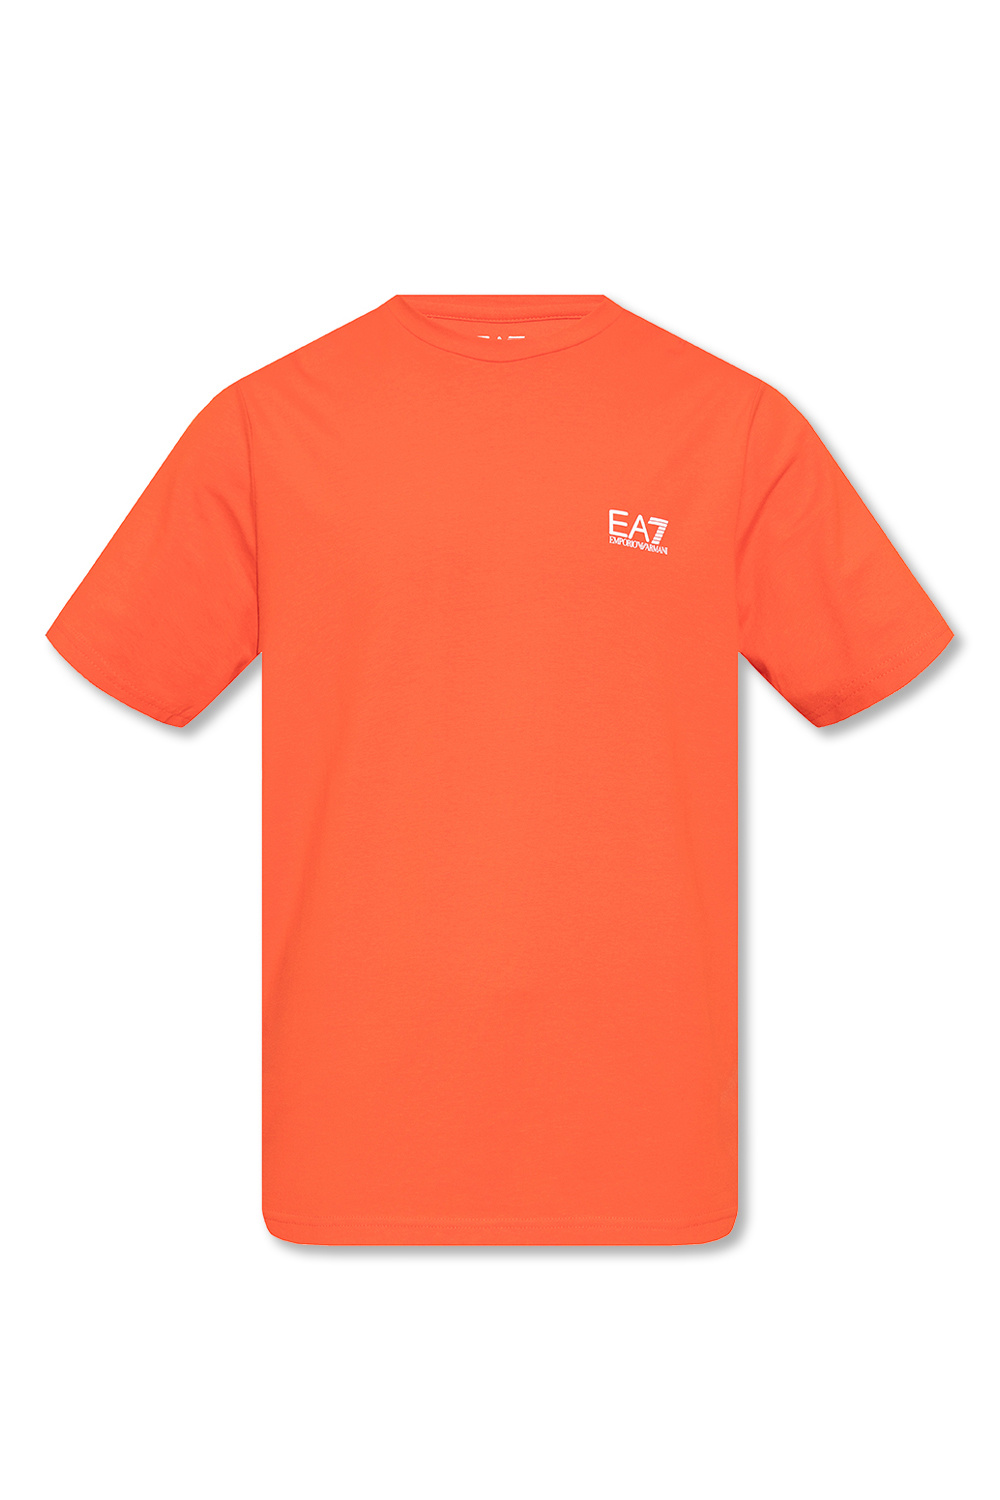 EA7 Emporio armani TPU T-shirt z logo